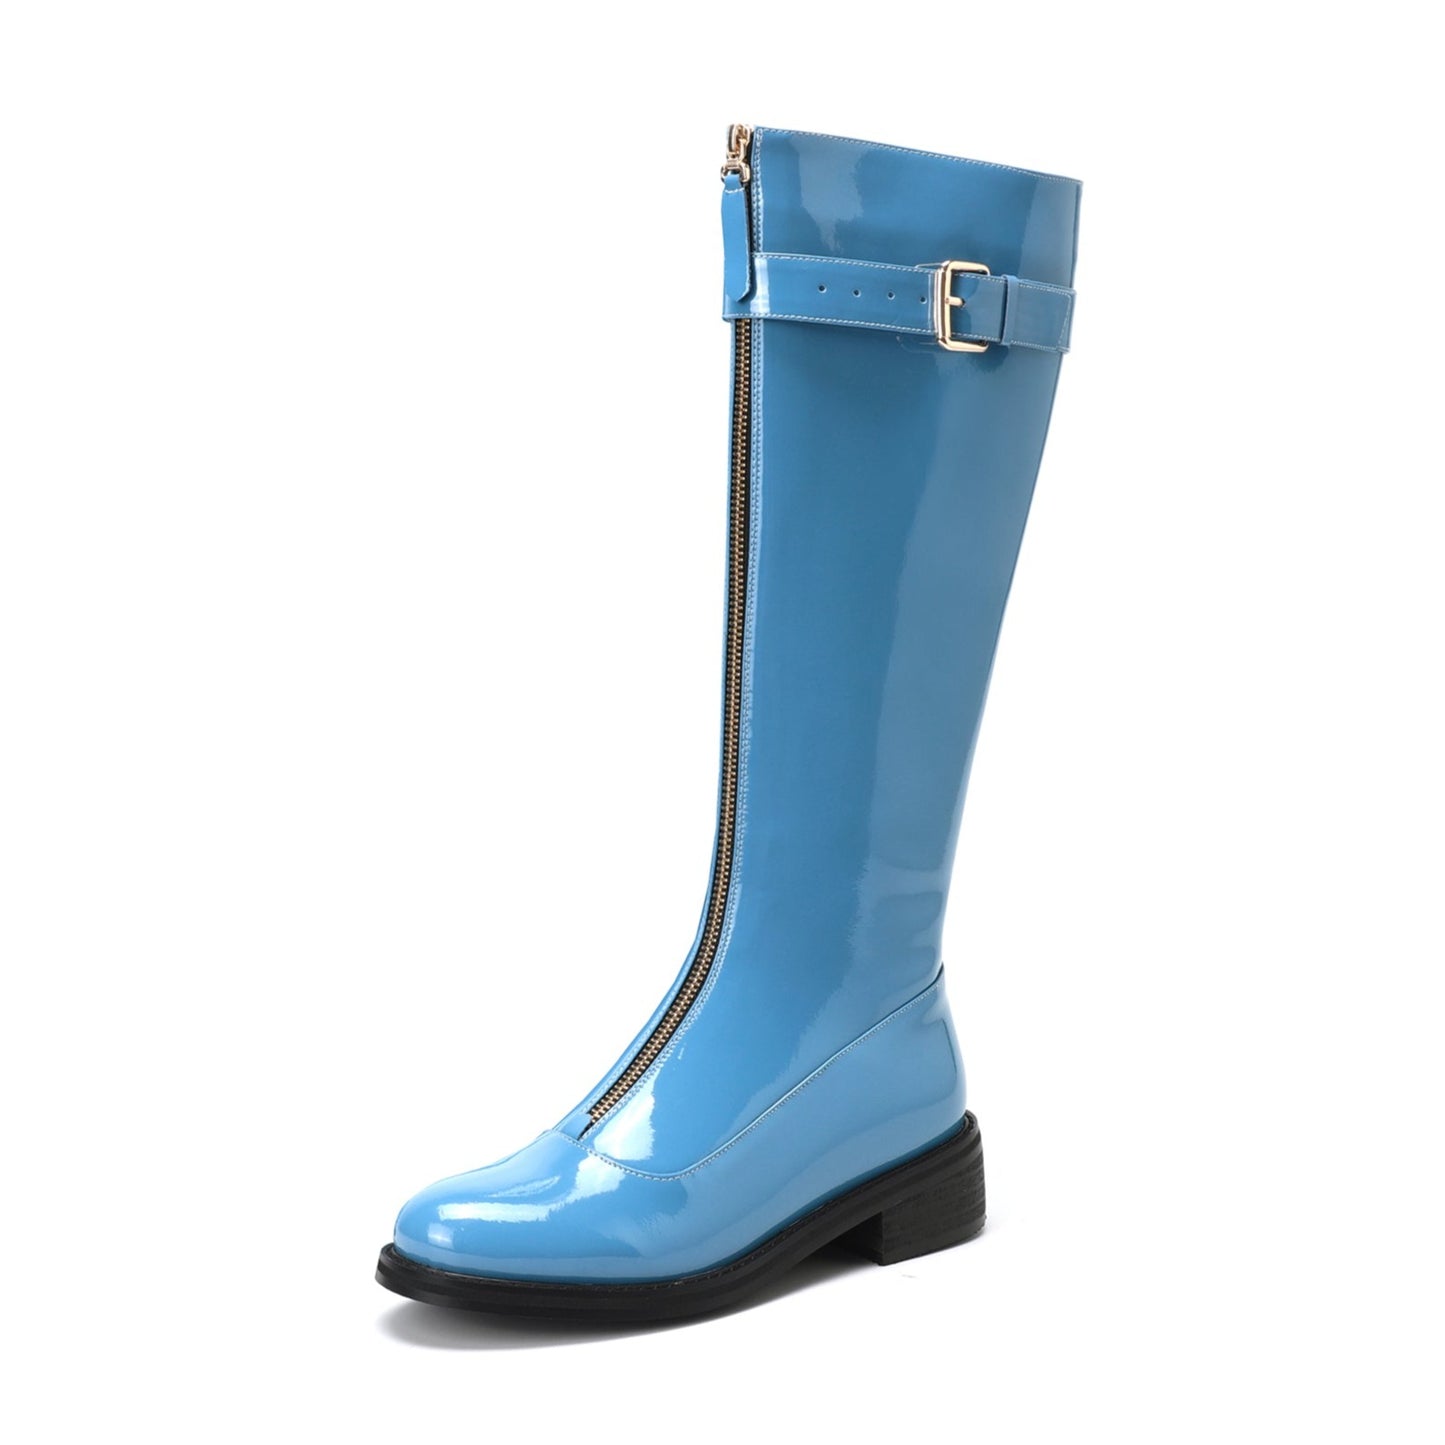 TinaCus Women's Genuine Leather Handmade Round Toe Front Zipper Comfort Low Heel Knee High Boots with Buckle